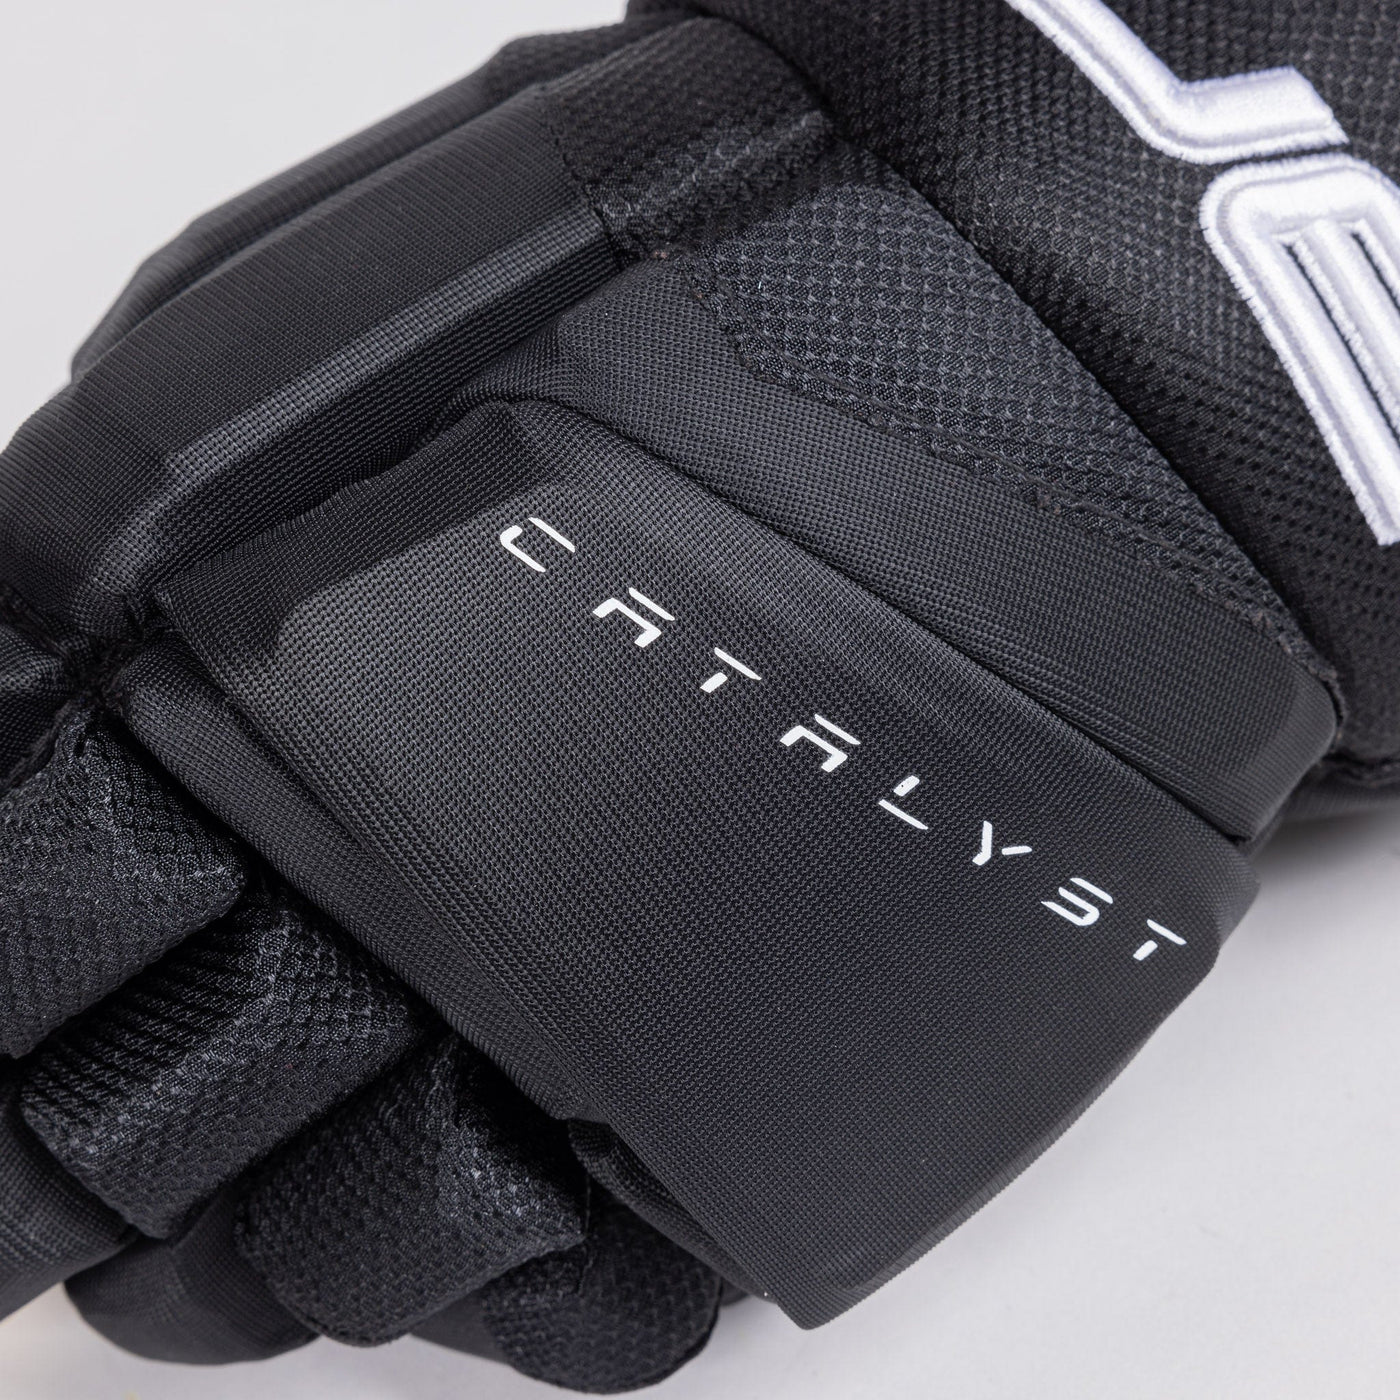 TRUE Catalyst Pro Stock Senior Hockey Glove - Colorado Avalanche - The Hockey Shop Source For Sports